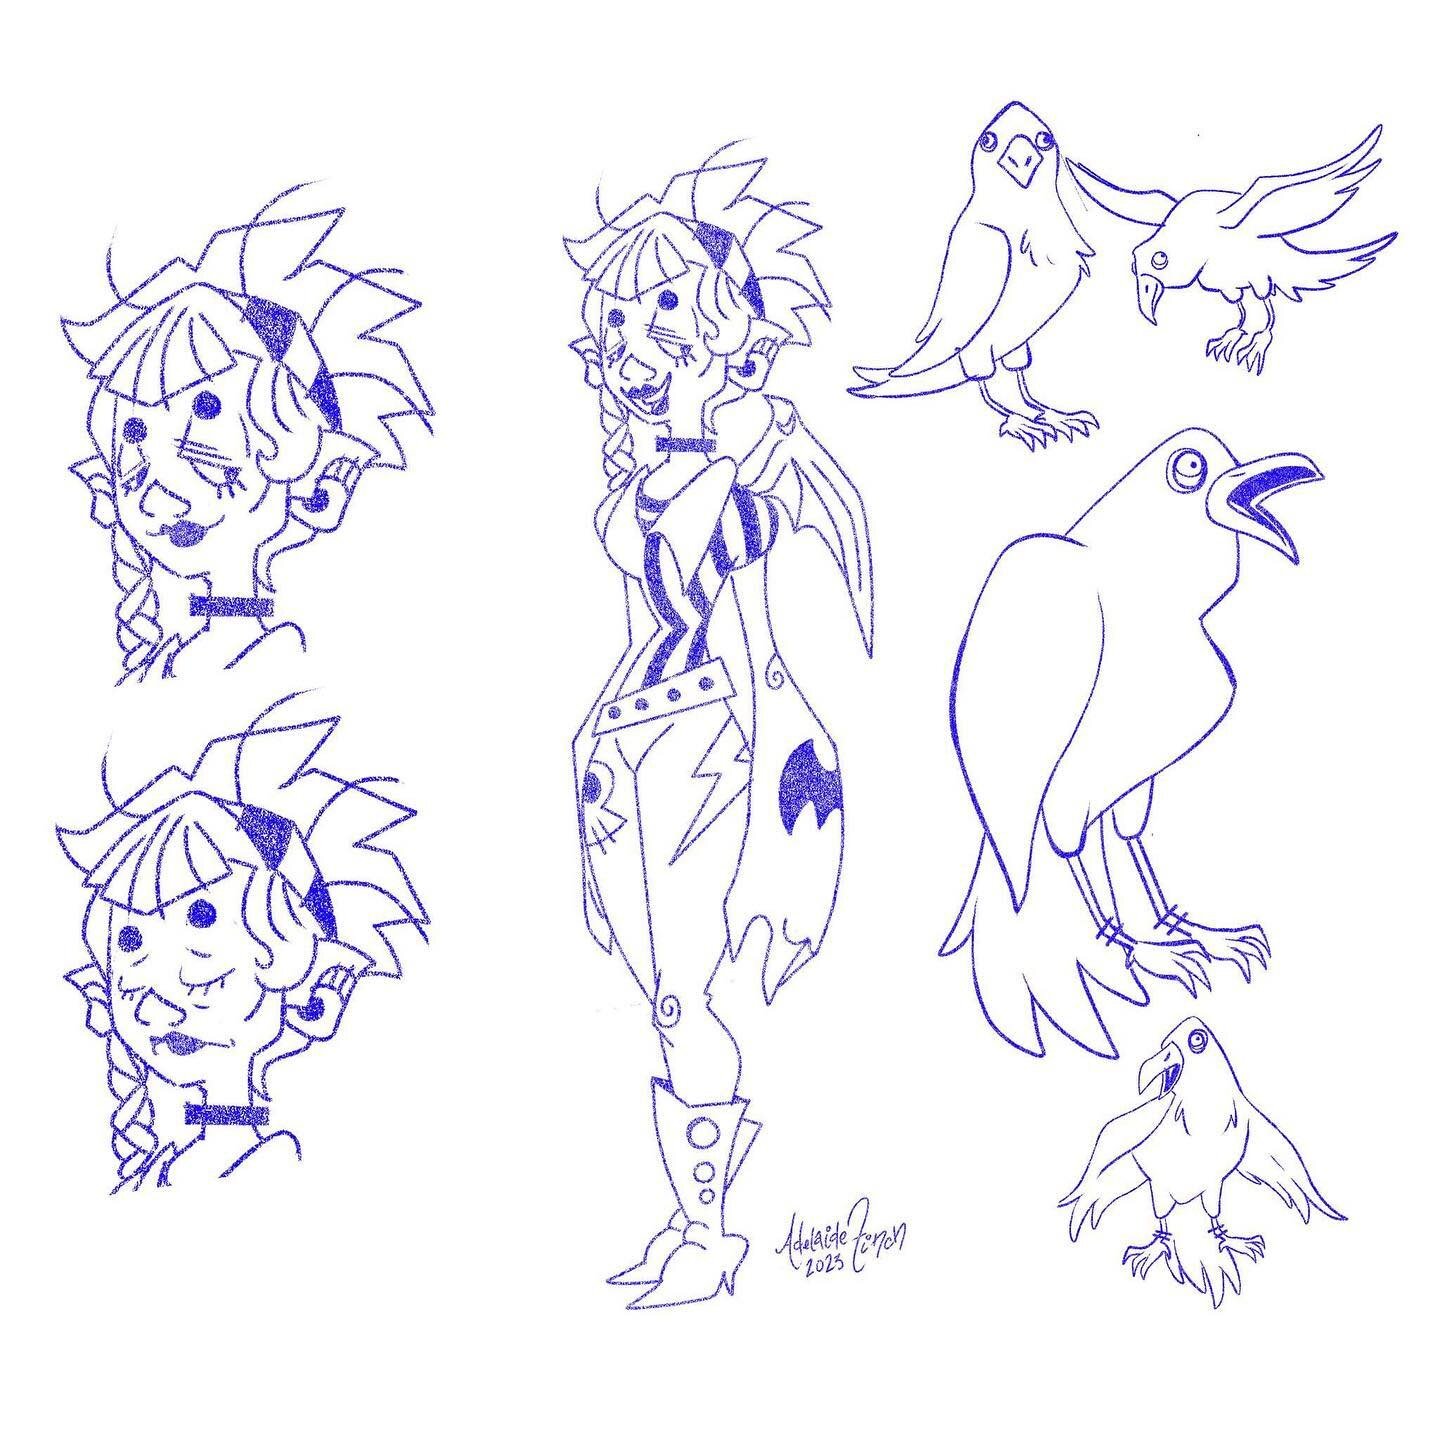 Character based on @linsey_tattoo :-) #character #design #characterdesign #oc #goth #bat #raven #art #artwork #artistsoninstagram #sketch #sketchbook #sketches